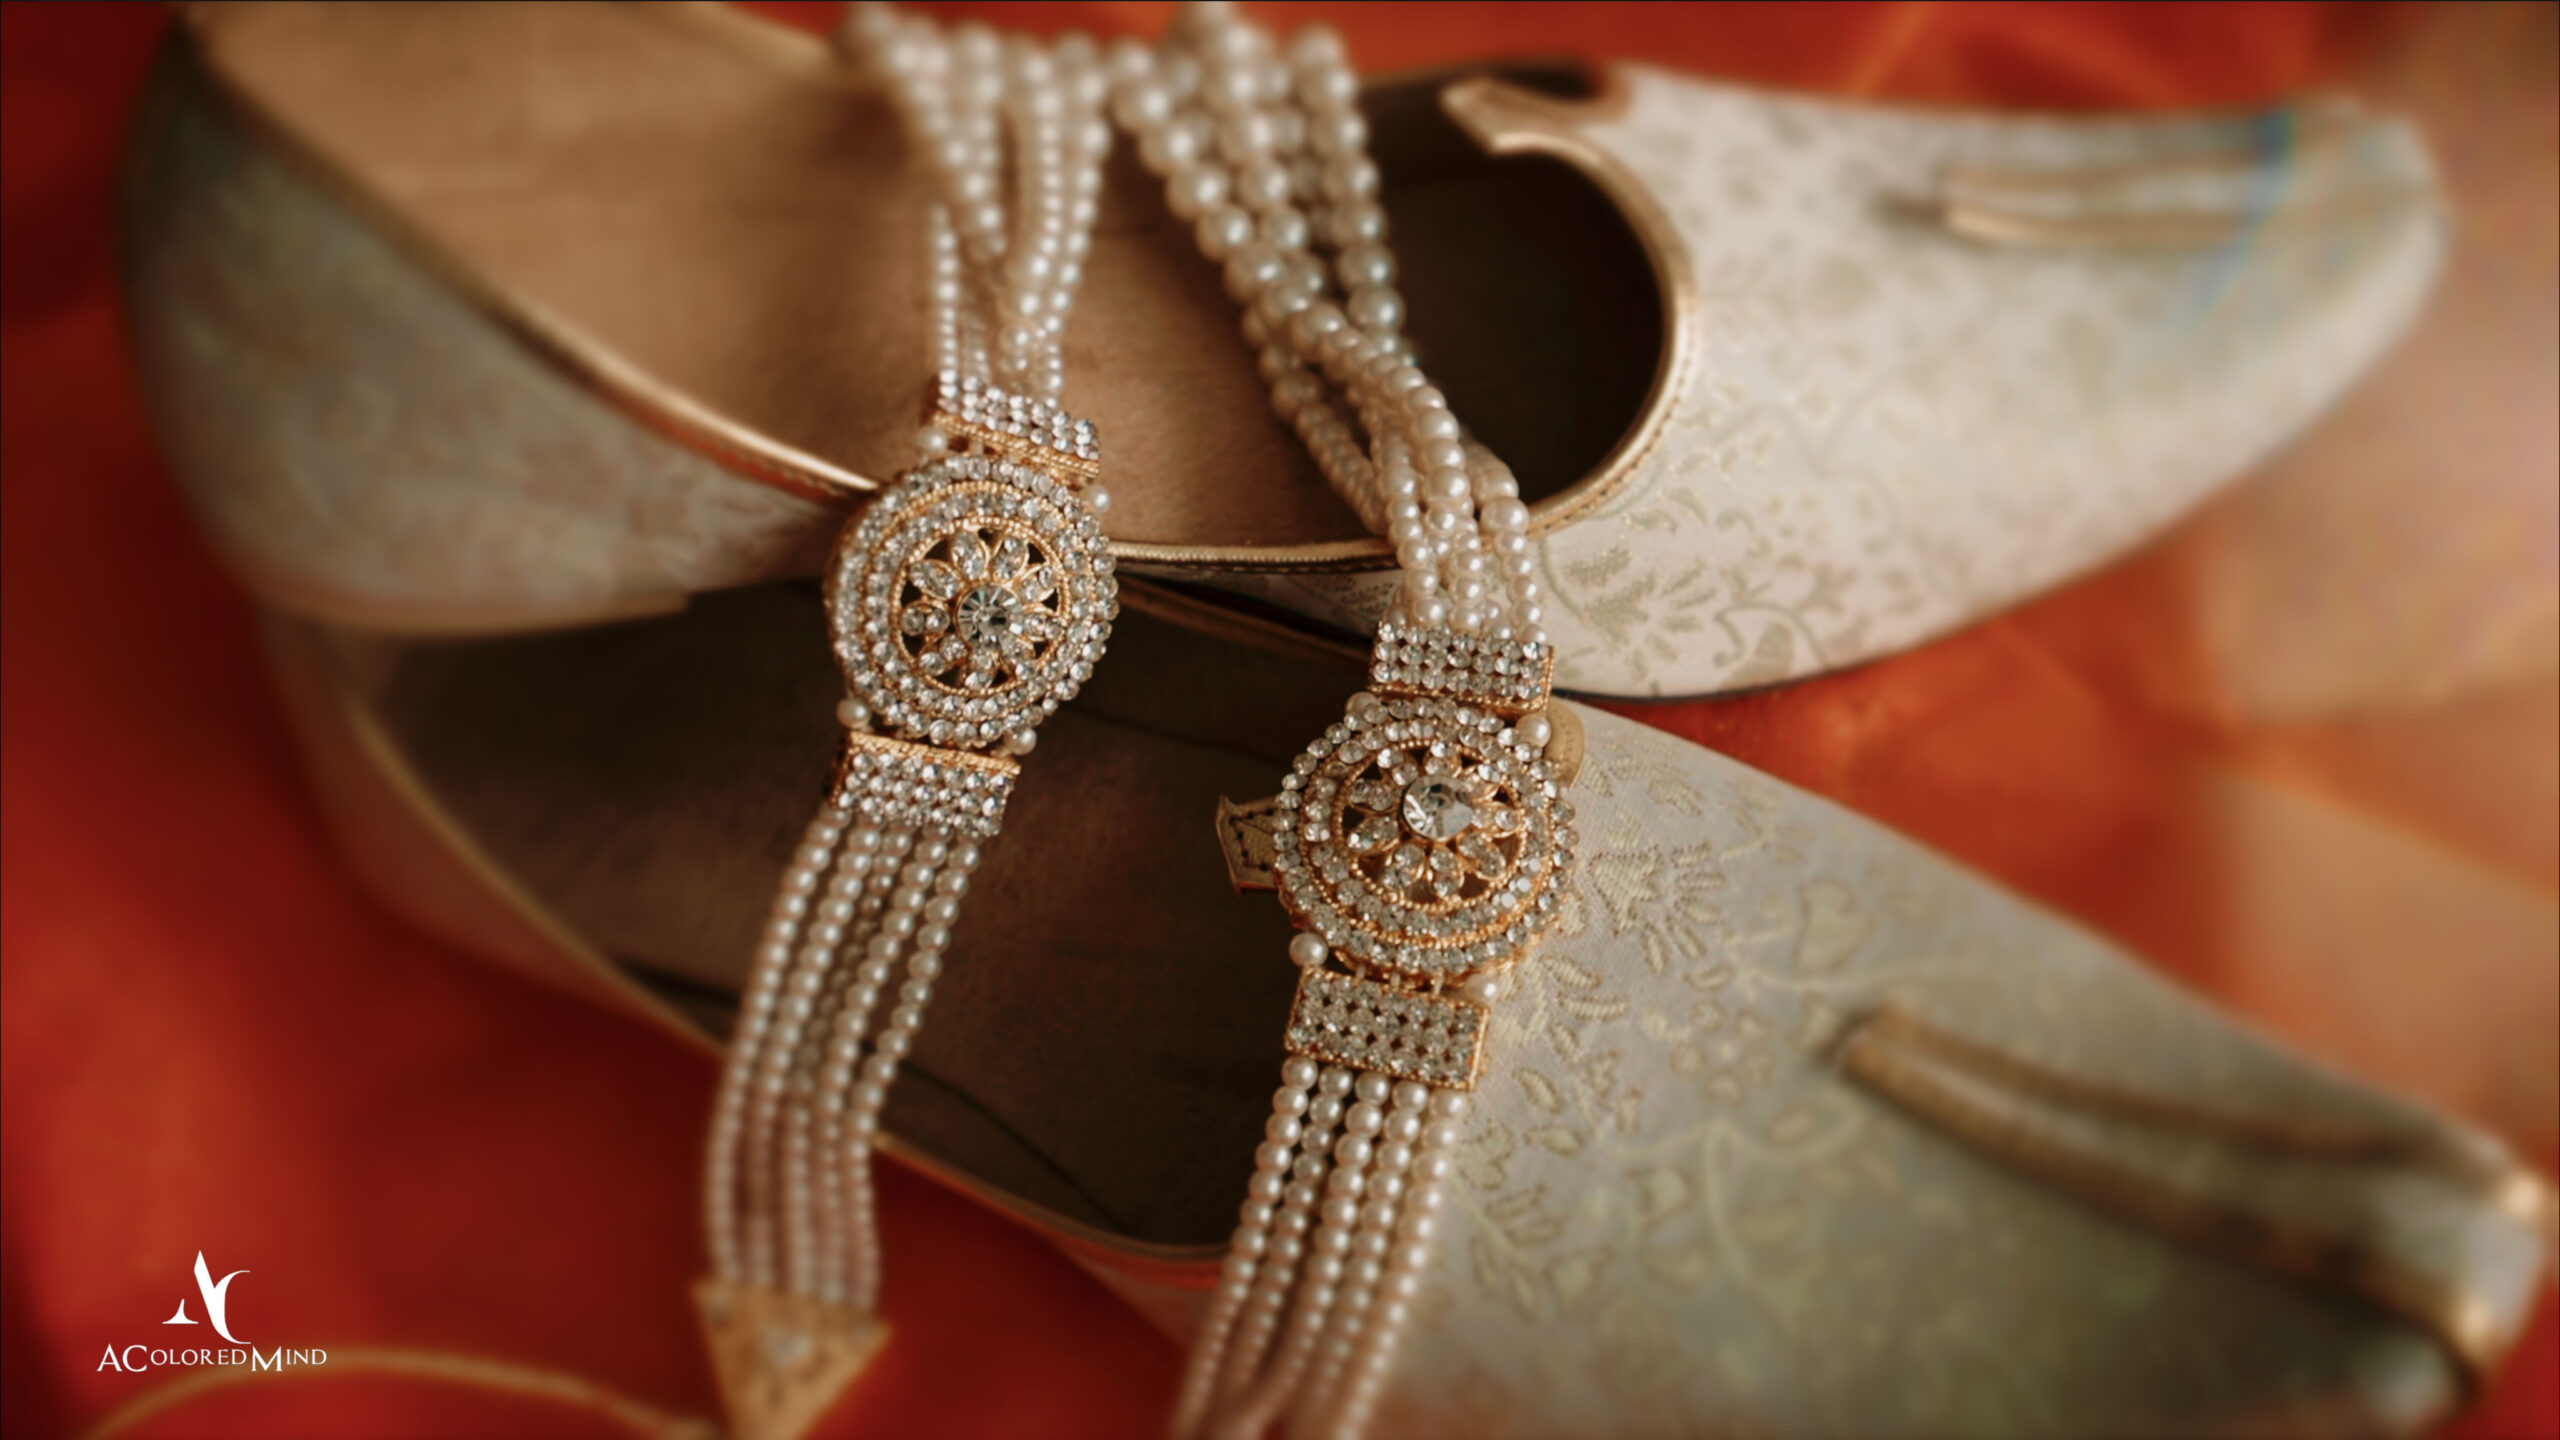 Indian wedding groom shoes detail shot.